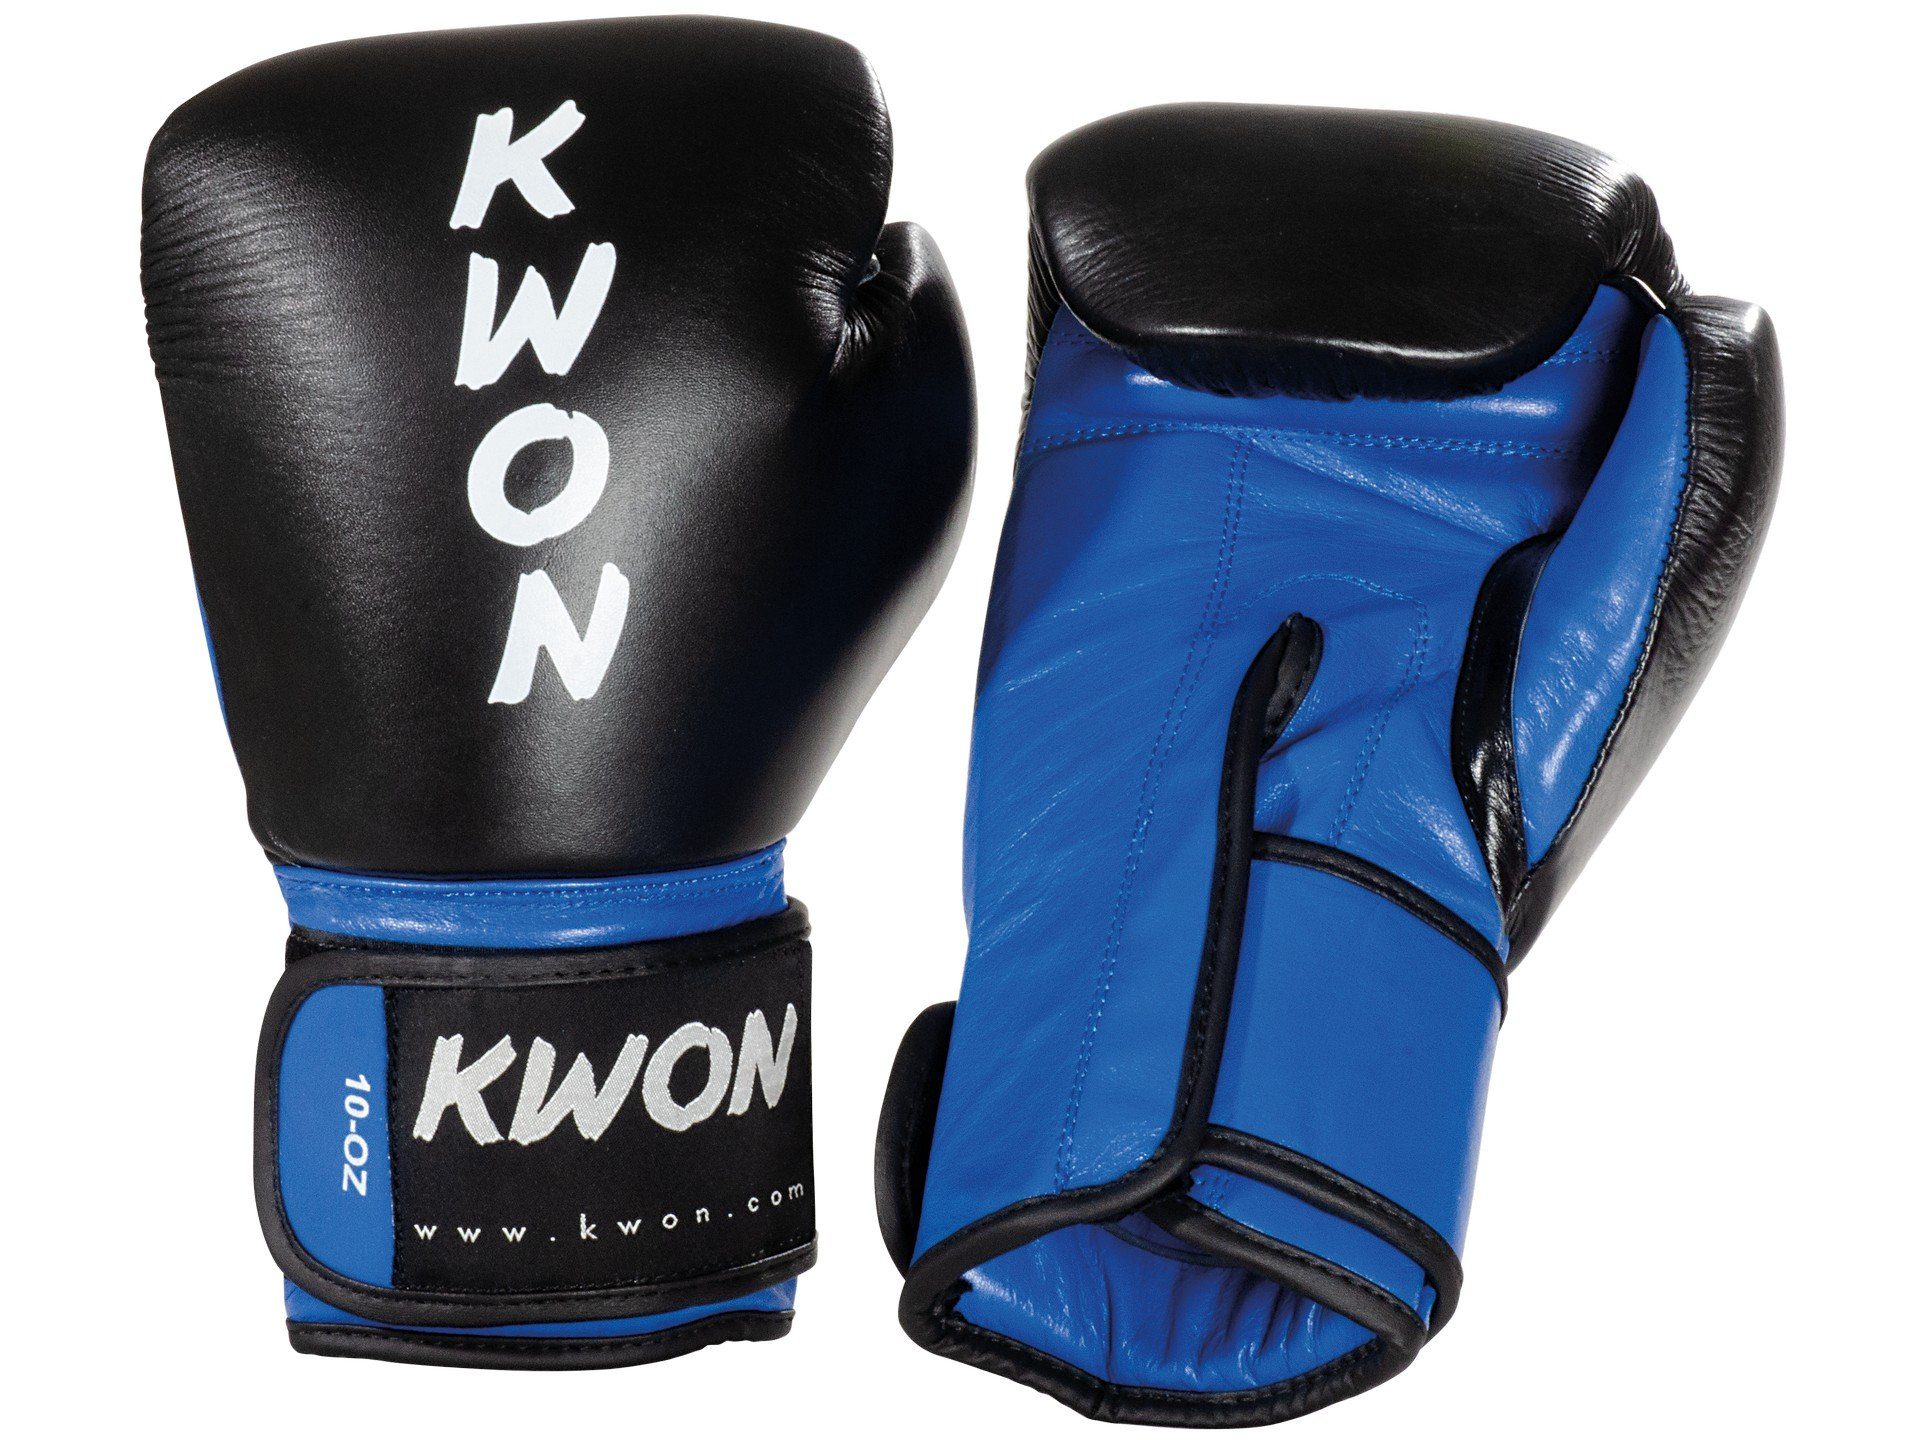 Champ Leder, schwarz/blau Box-Handschuhe Thaiboxen Paar), Kickboxen KO Profi Profi Ergo KWON anerkannt Leder Boxen Ausführung, (Vollkontakt, Boxhandschuhe Form, Echtes WKU